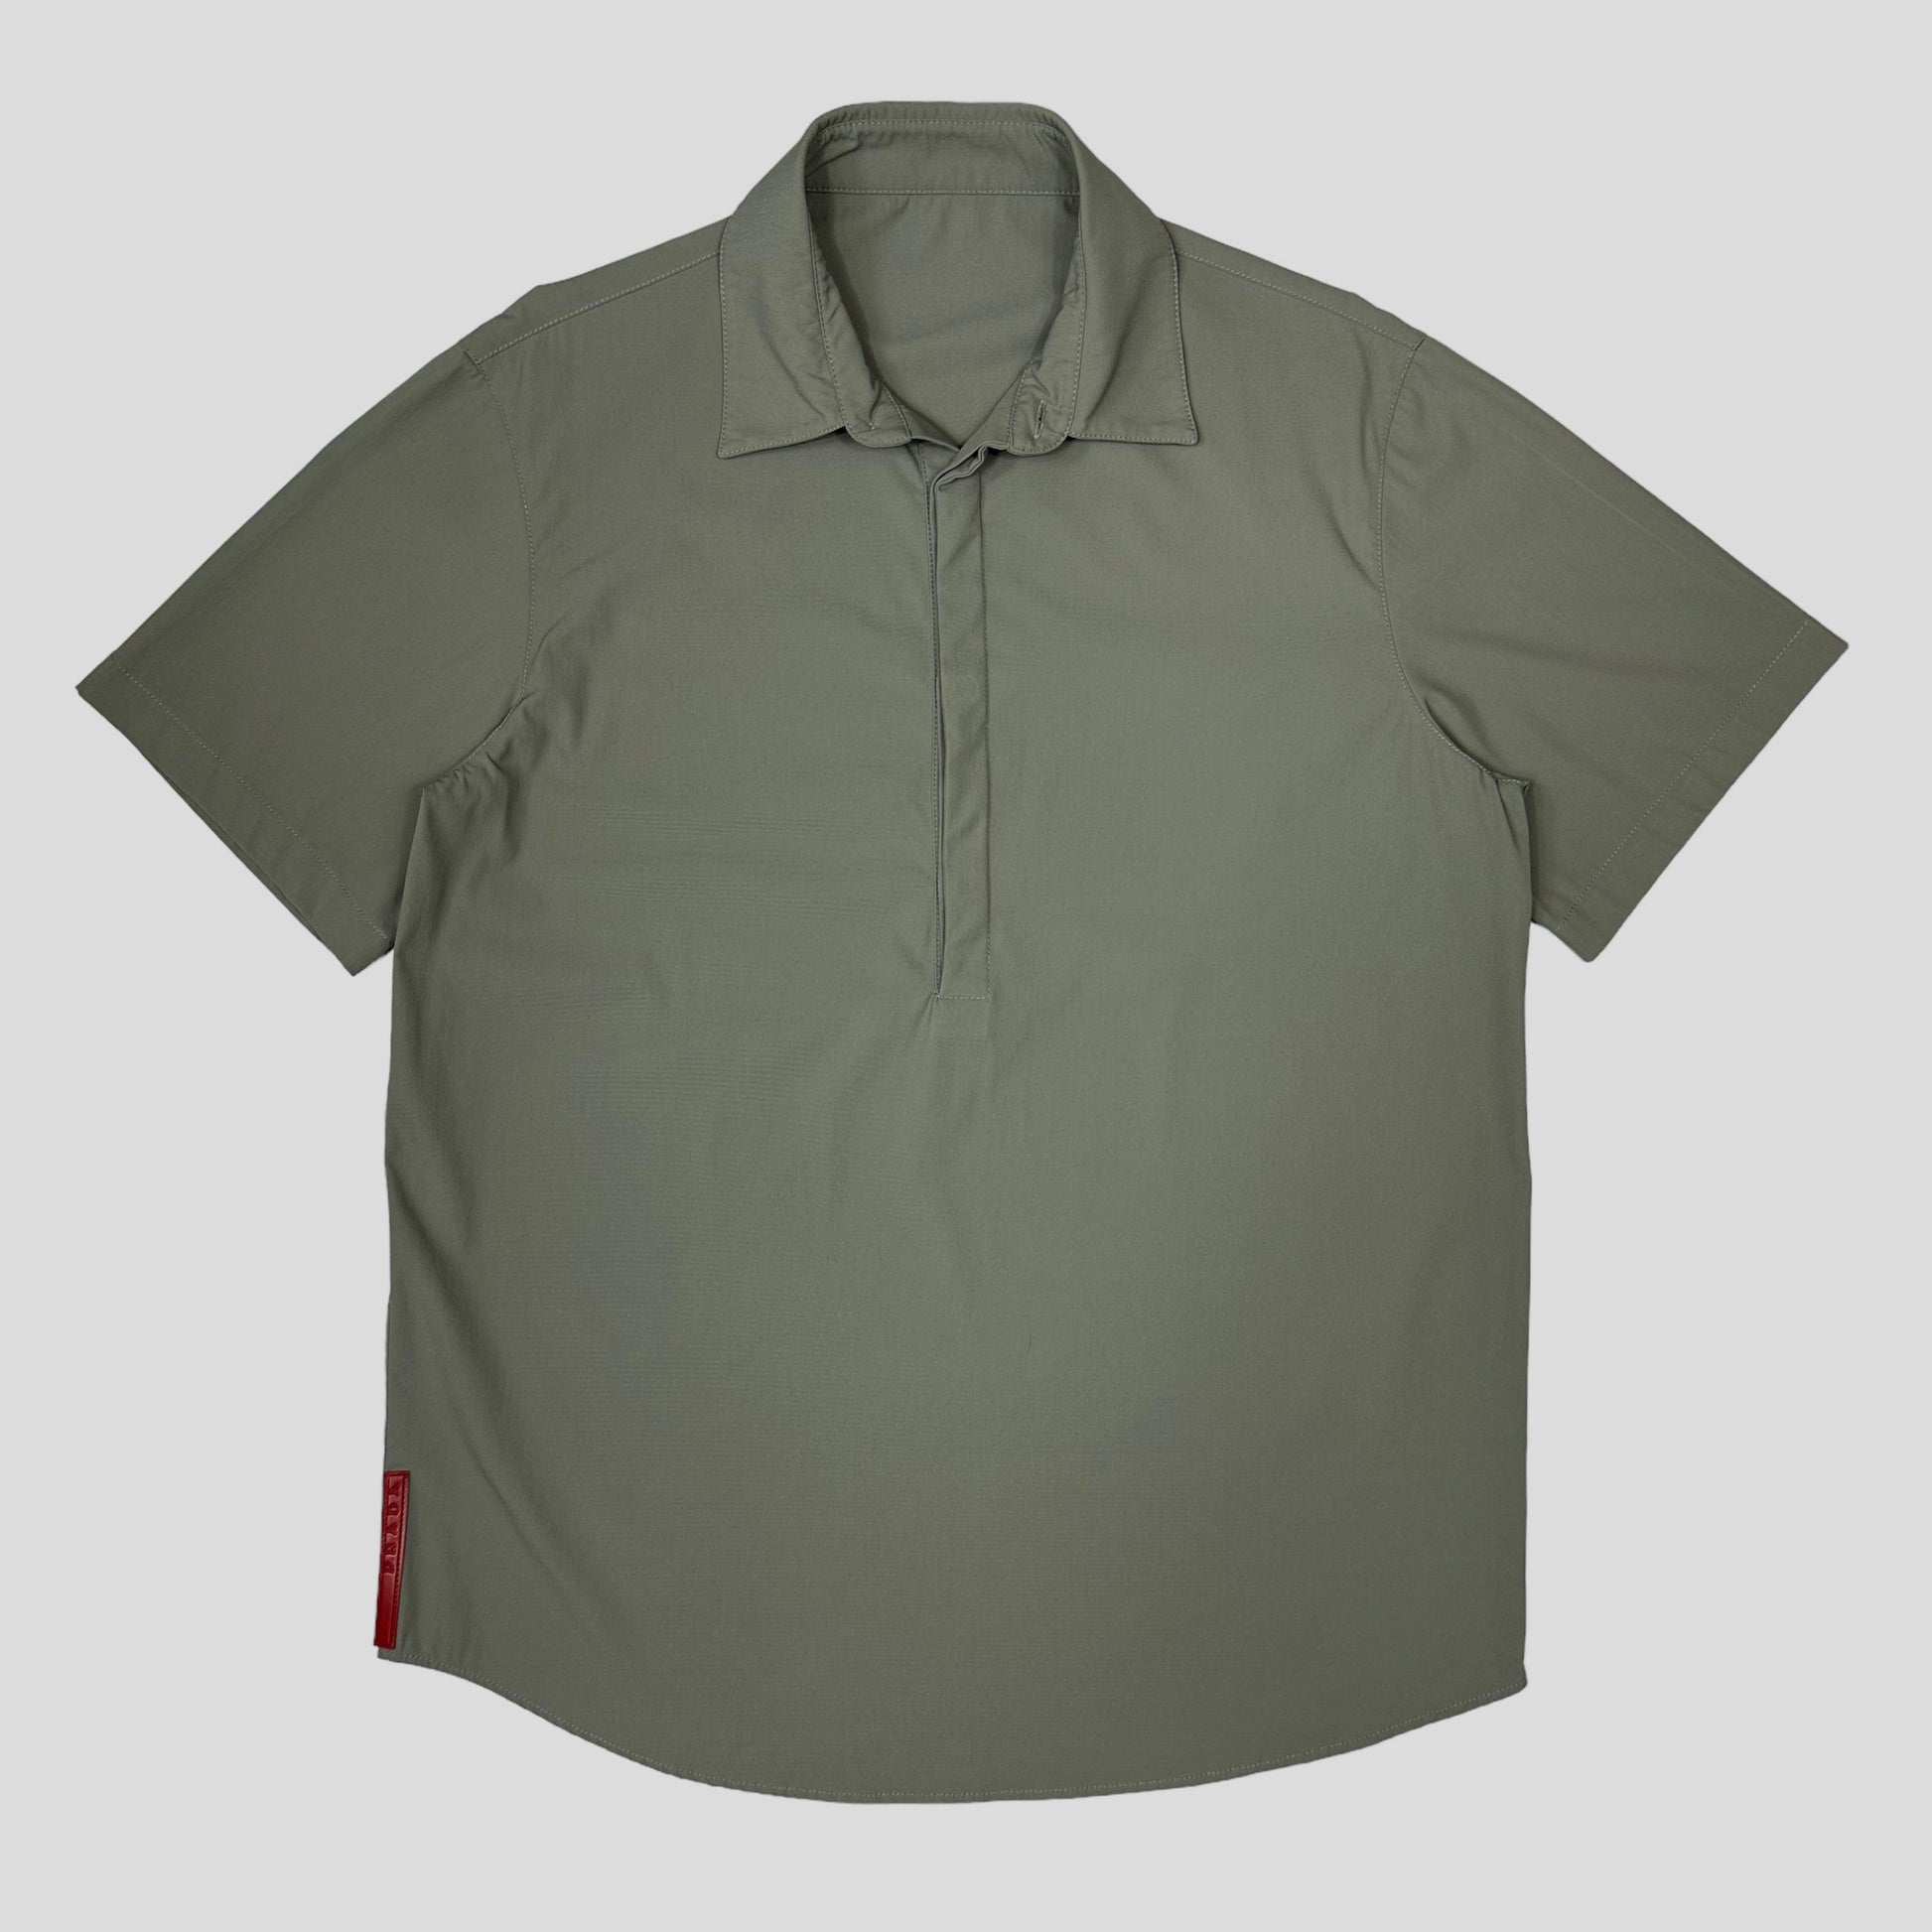 Prada Sport early 00’s Nylon 1/2 Button Shirt - M - Known Source